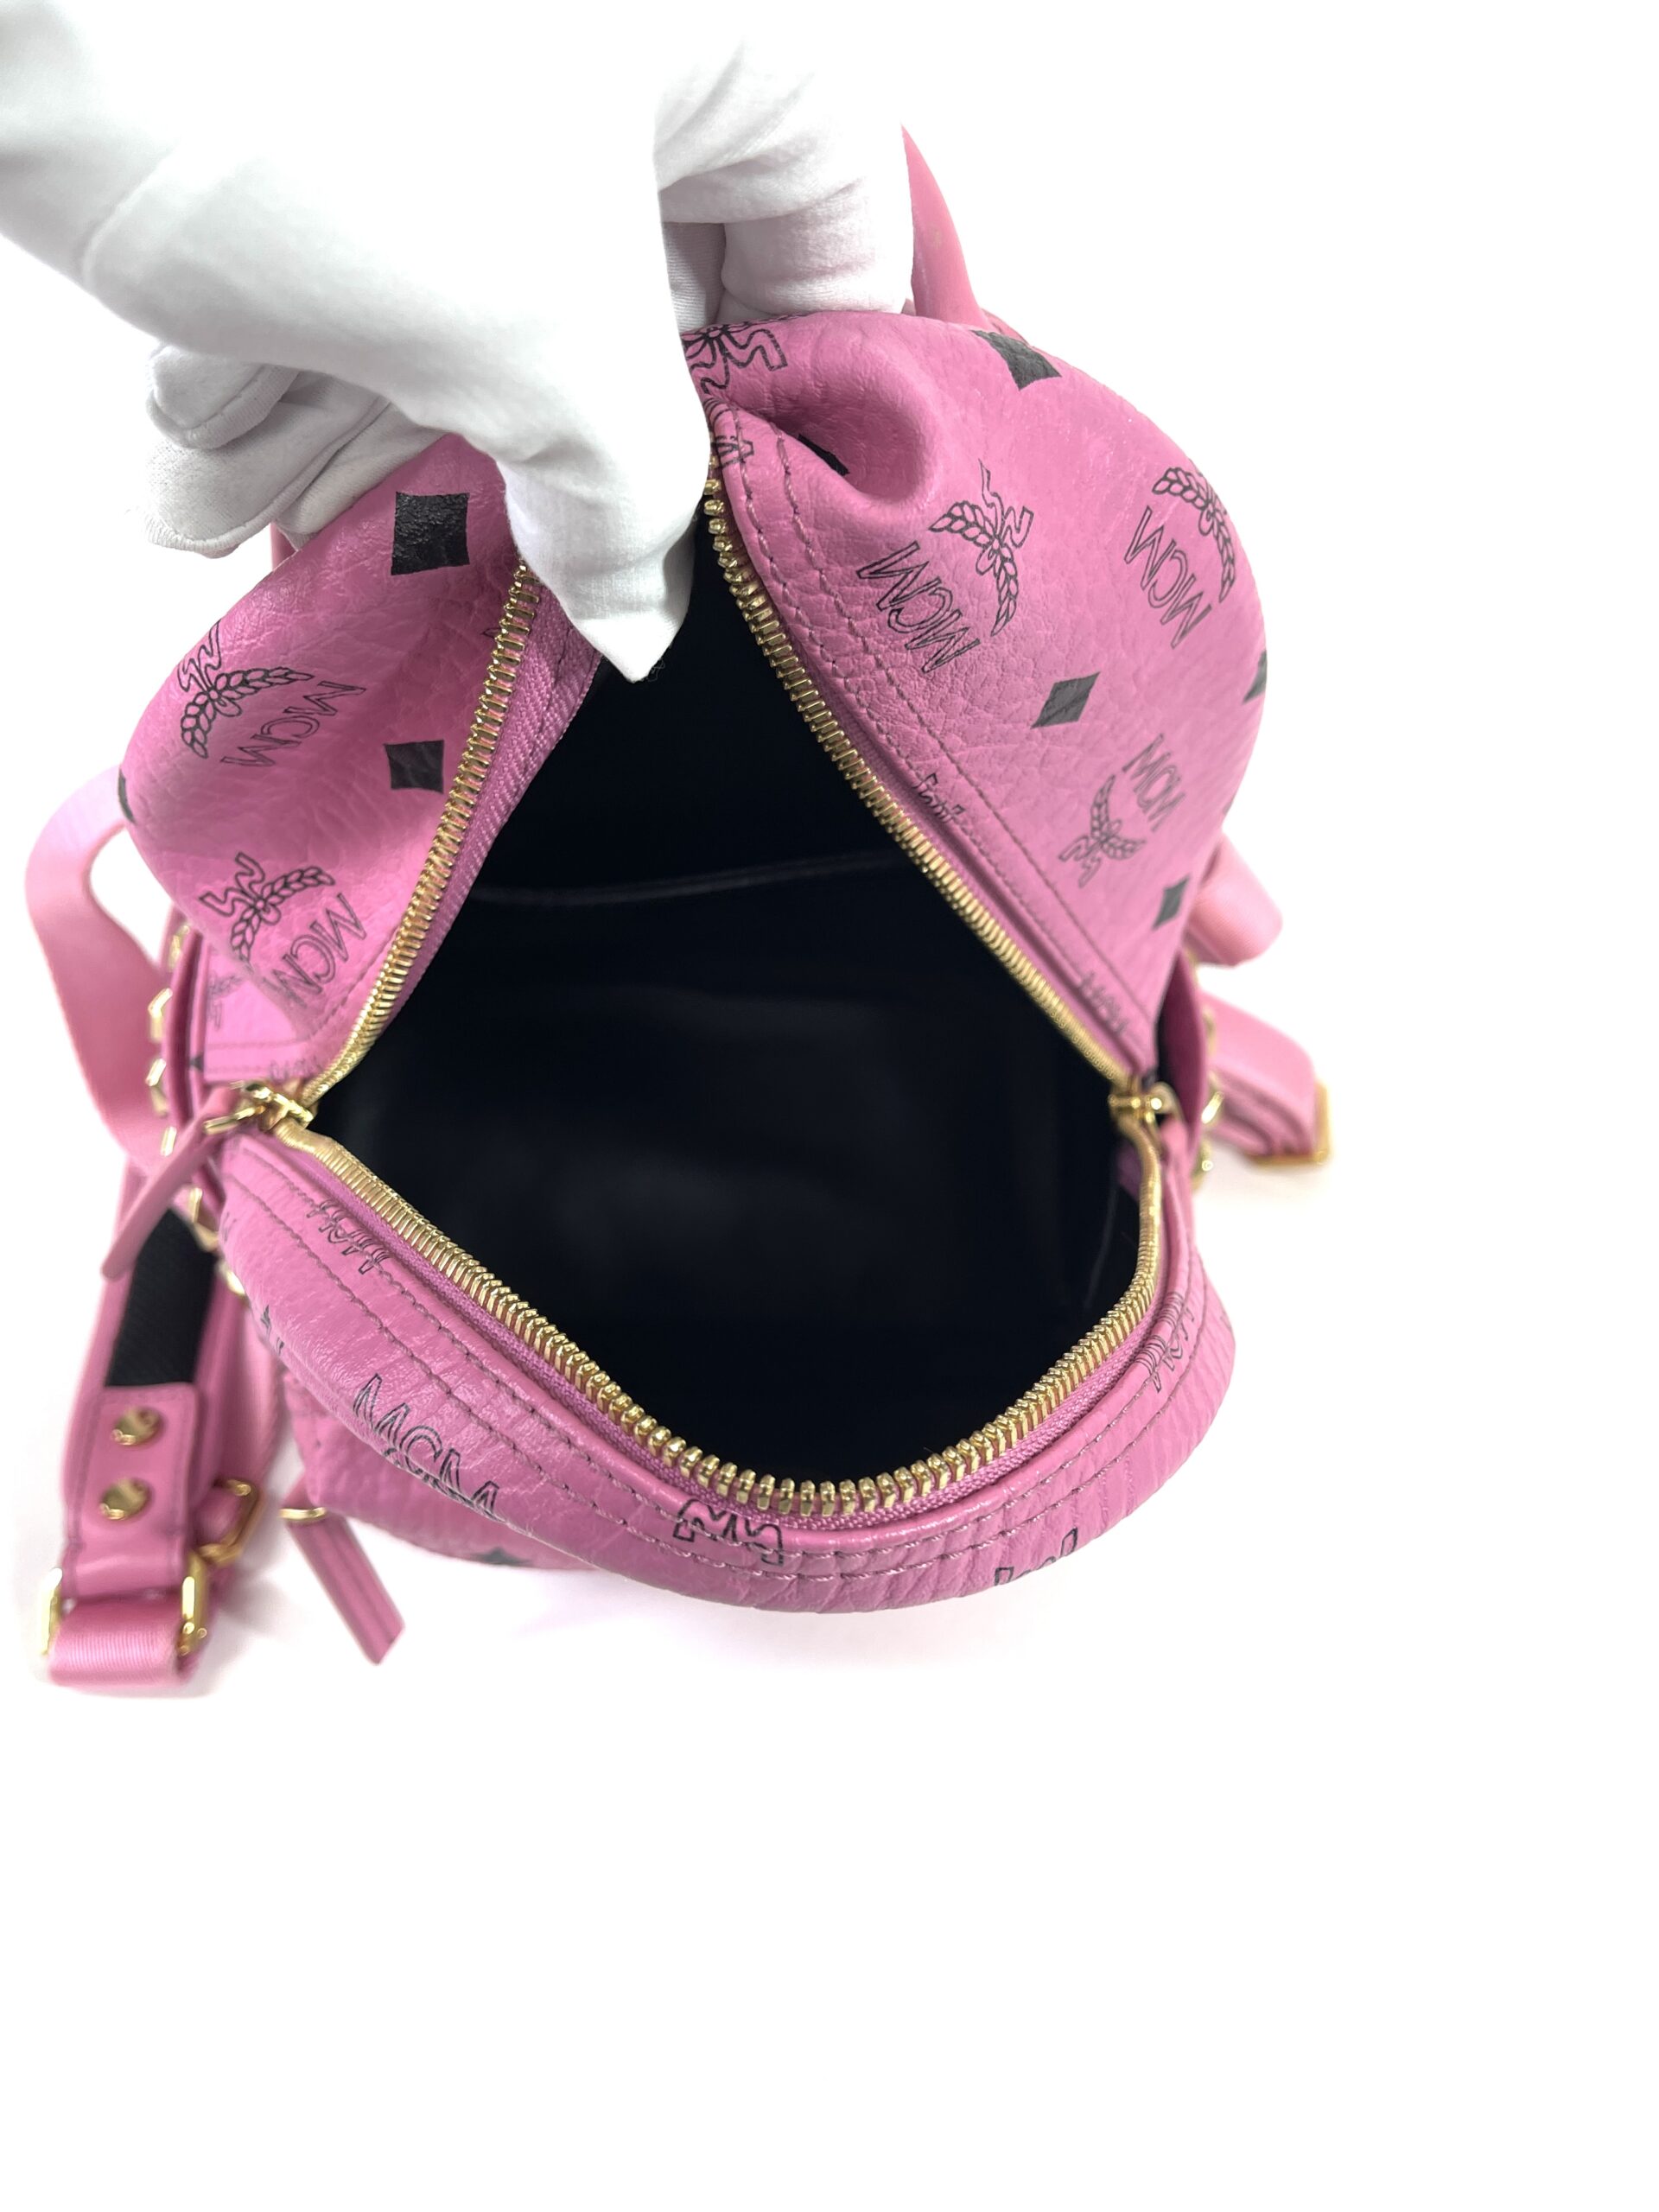 MCM Mini Side Studded Stark Backpack - Pink Backpacks, Handbags - W3049526